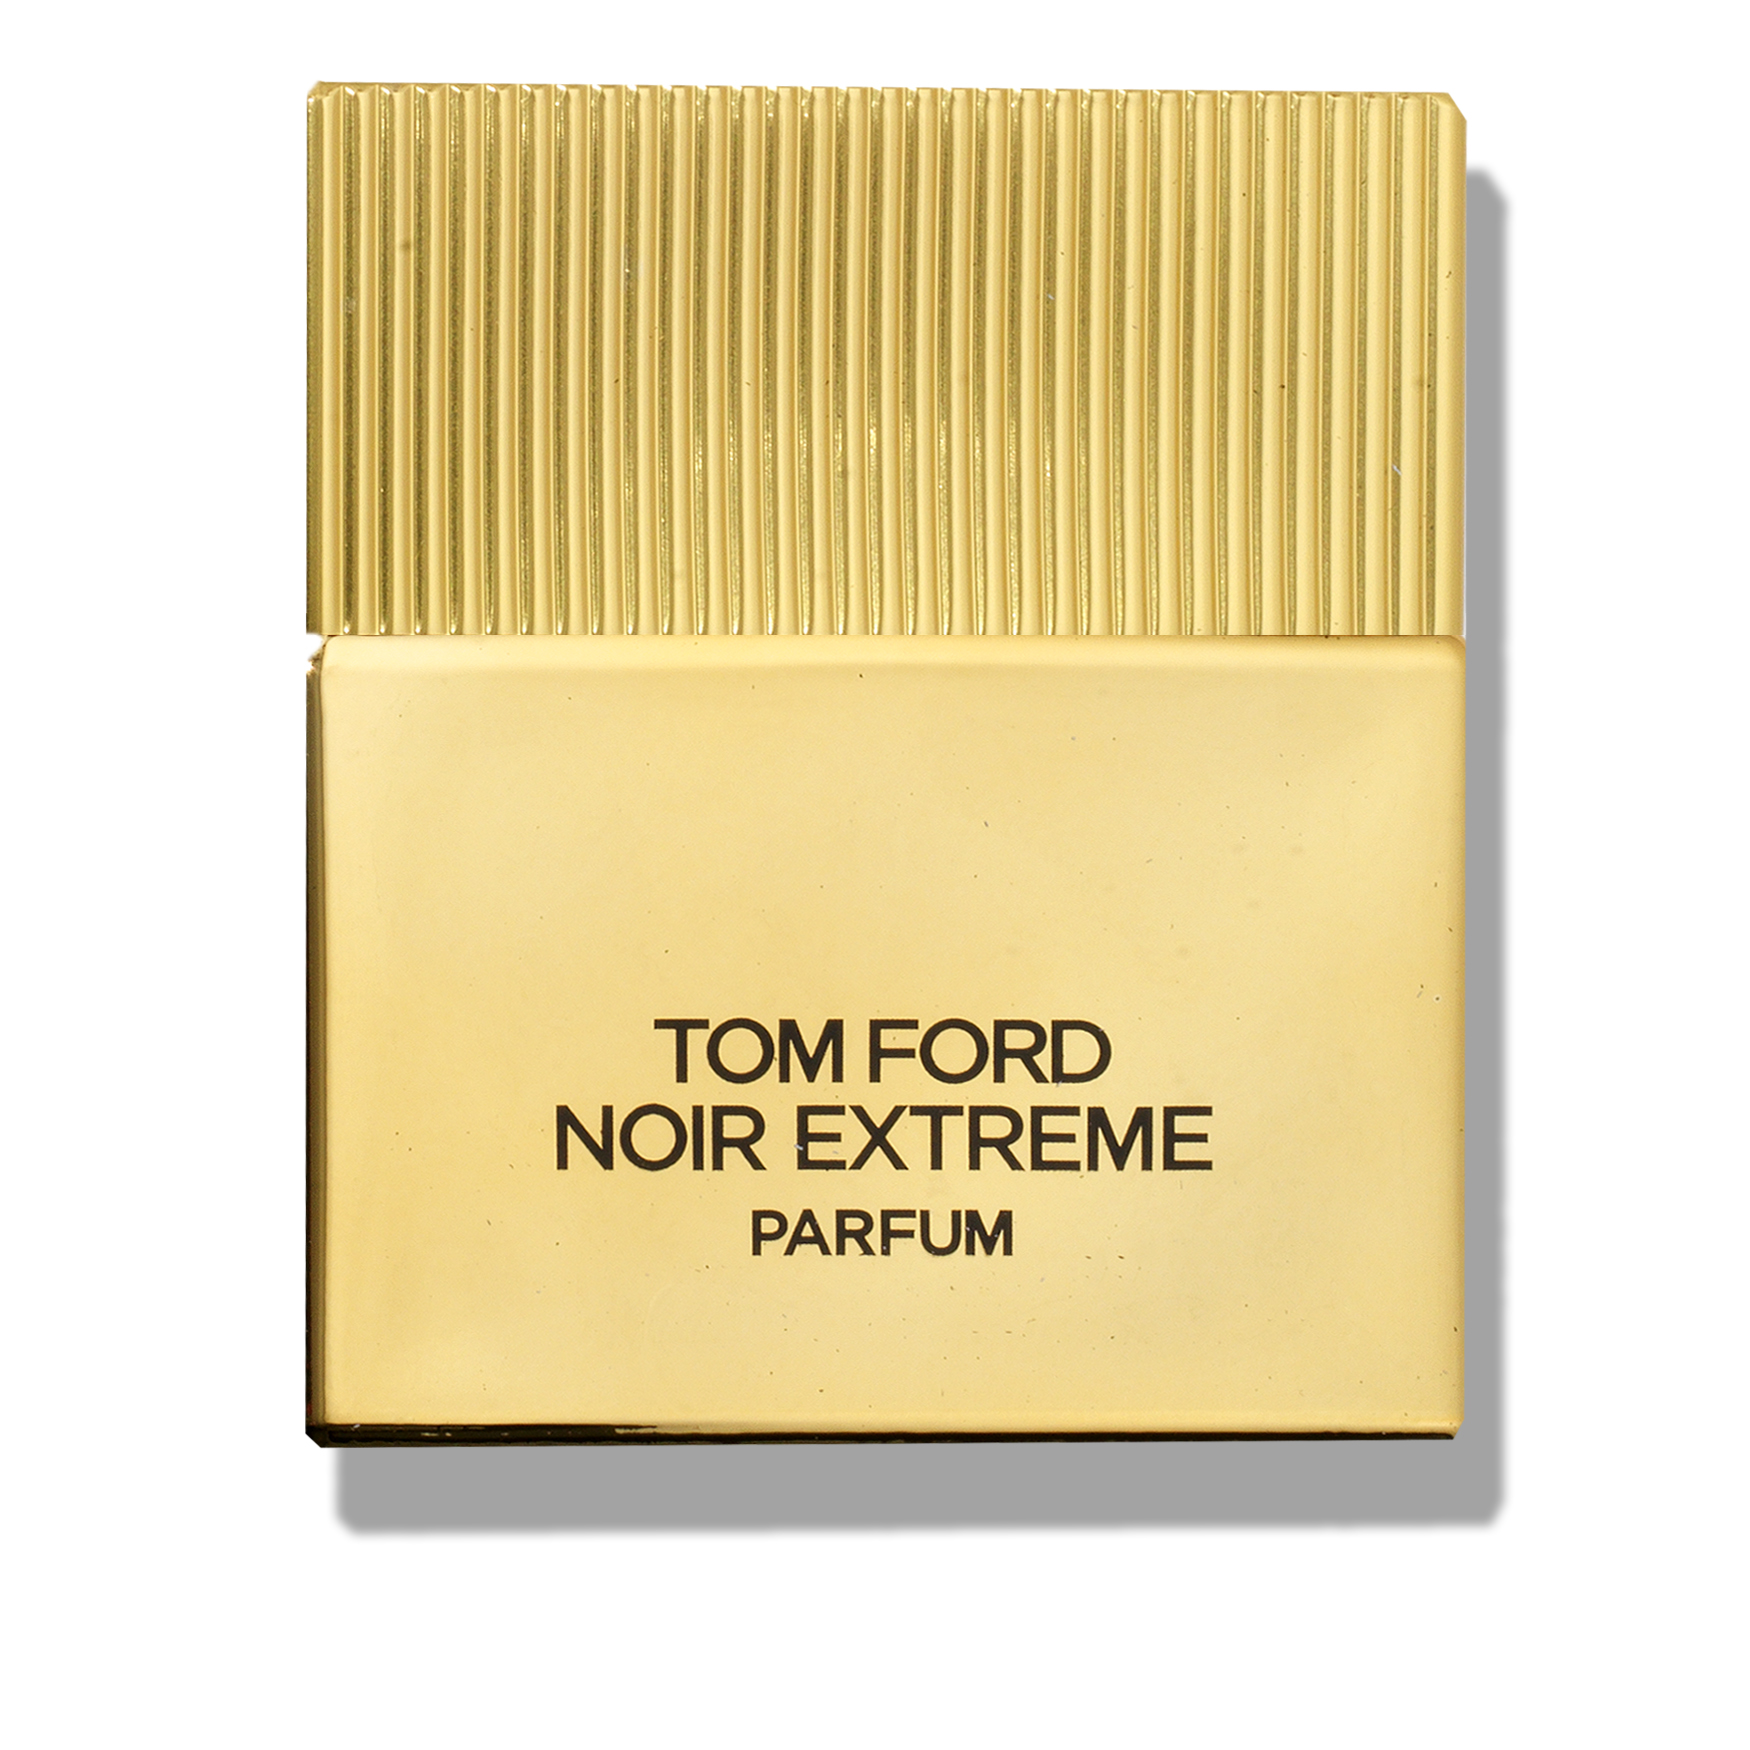 Tom Ford Noir Extreme Parfum | Space NK